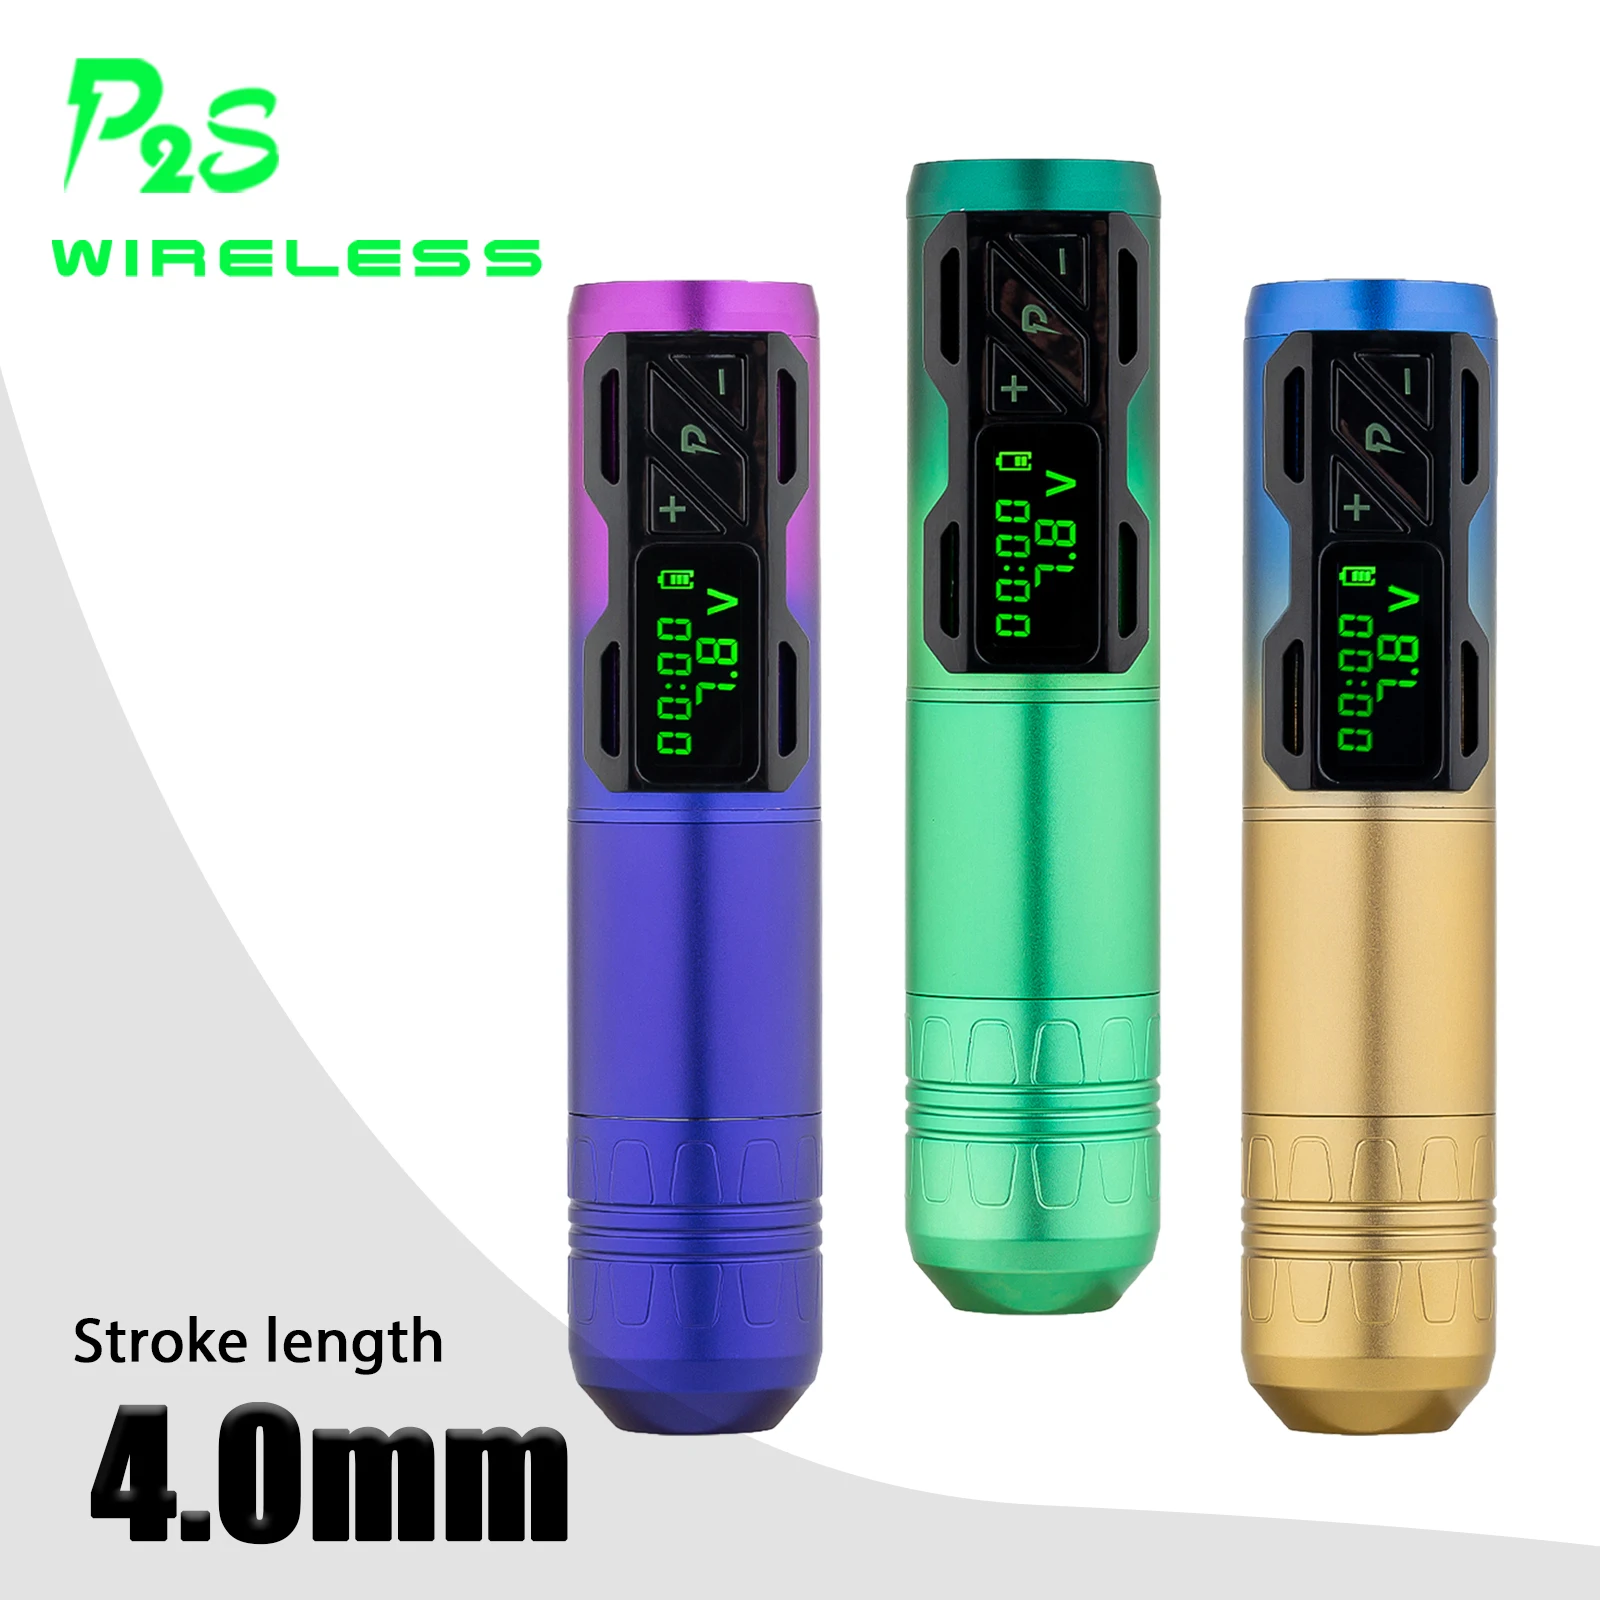 4.0mm Stroke EZ Portex Gen 2S Wireless Battery Tattoo Pen Machine Swiss Motor LCD Digital Display  Artist Body Permanent Makeup